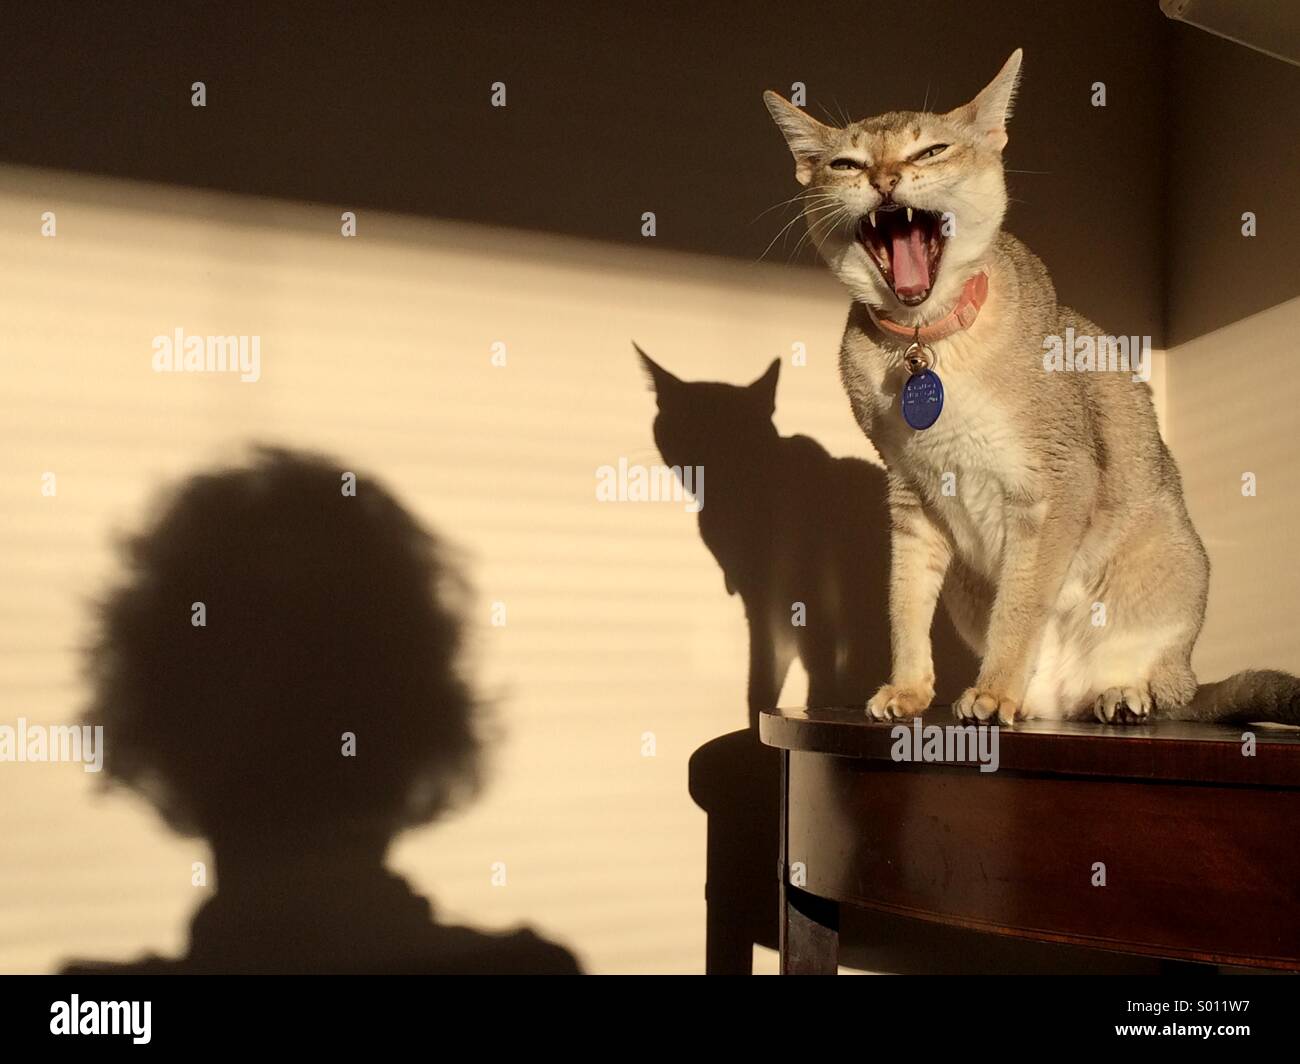 cat-yawning-hissing-at-person-seen-as-sh